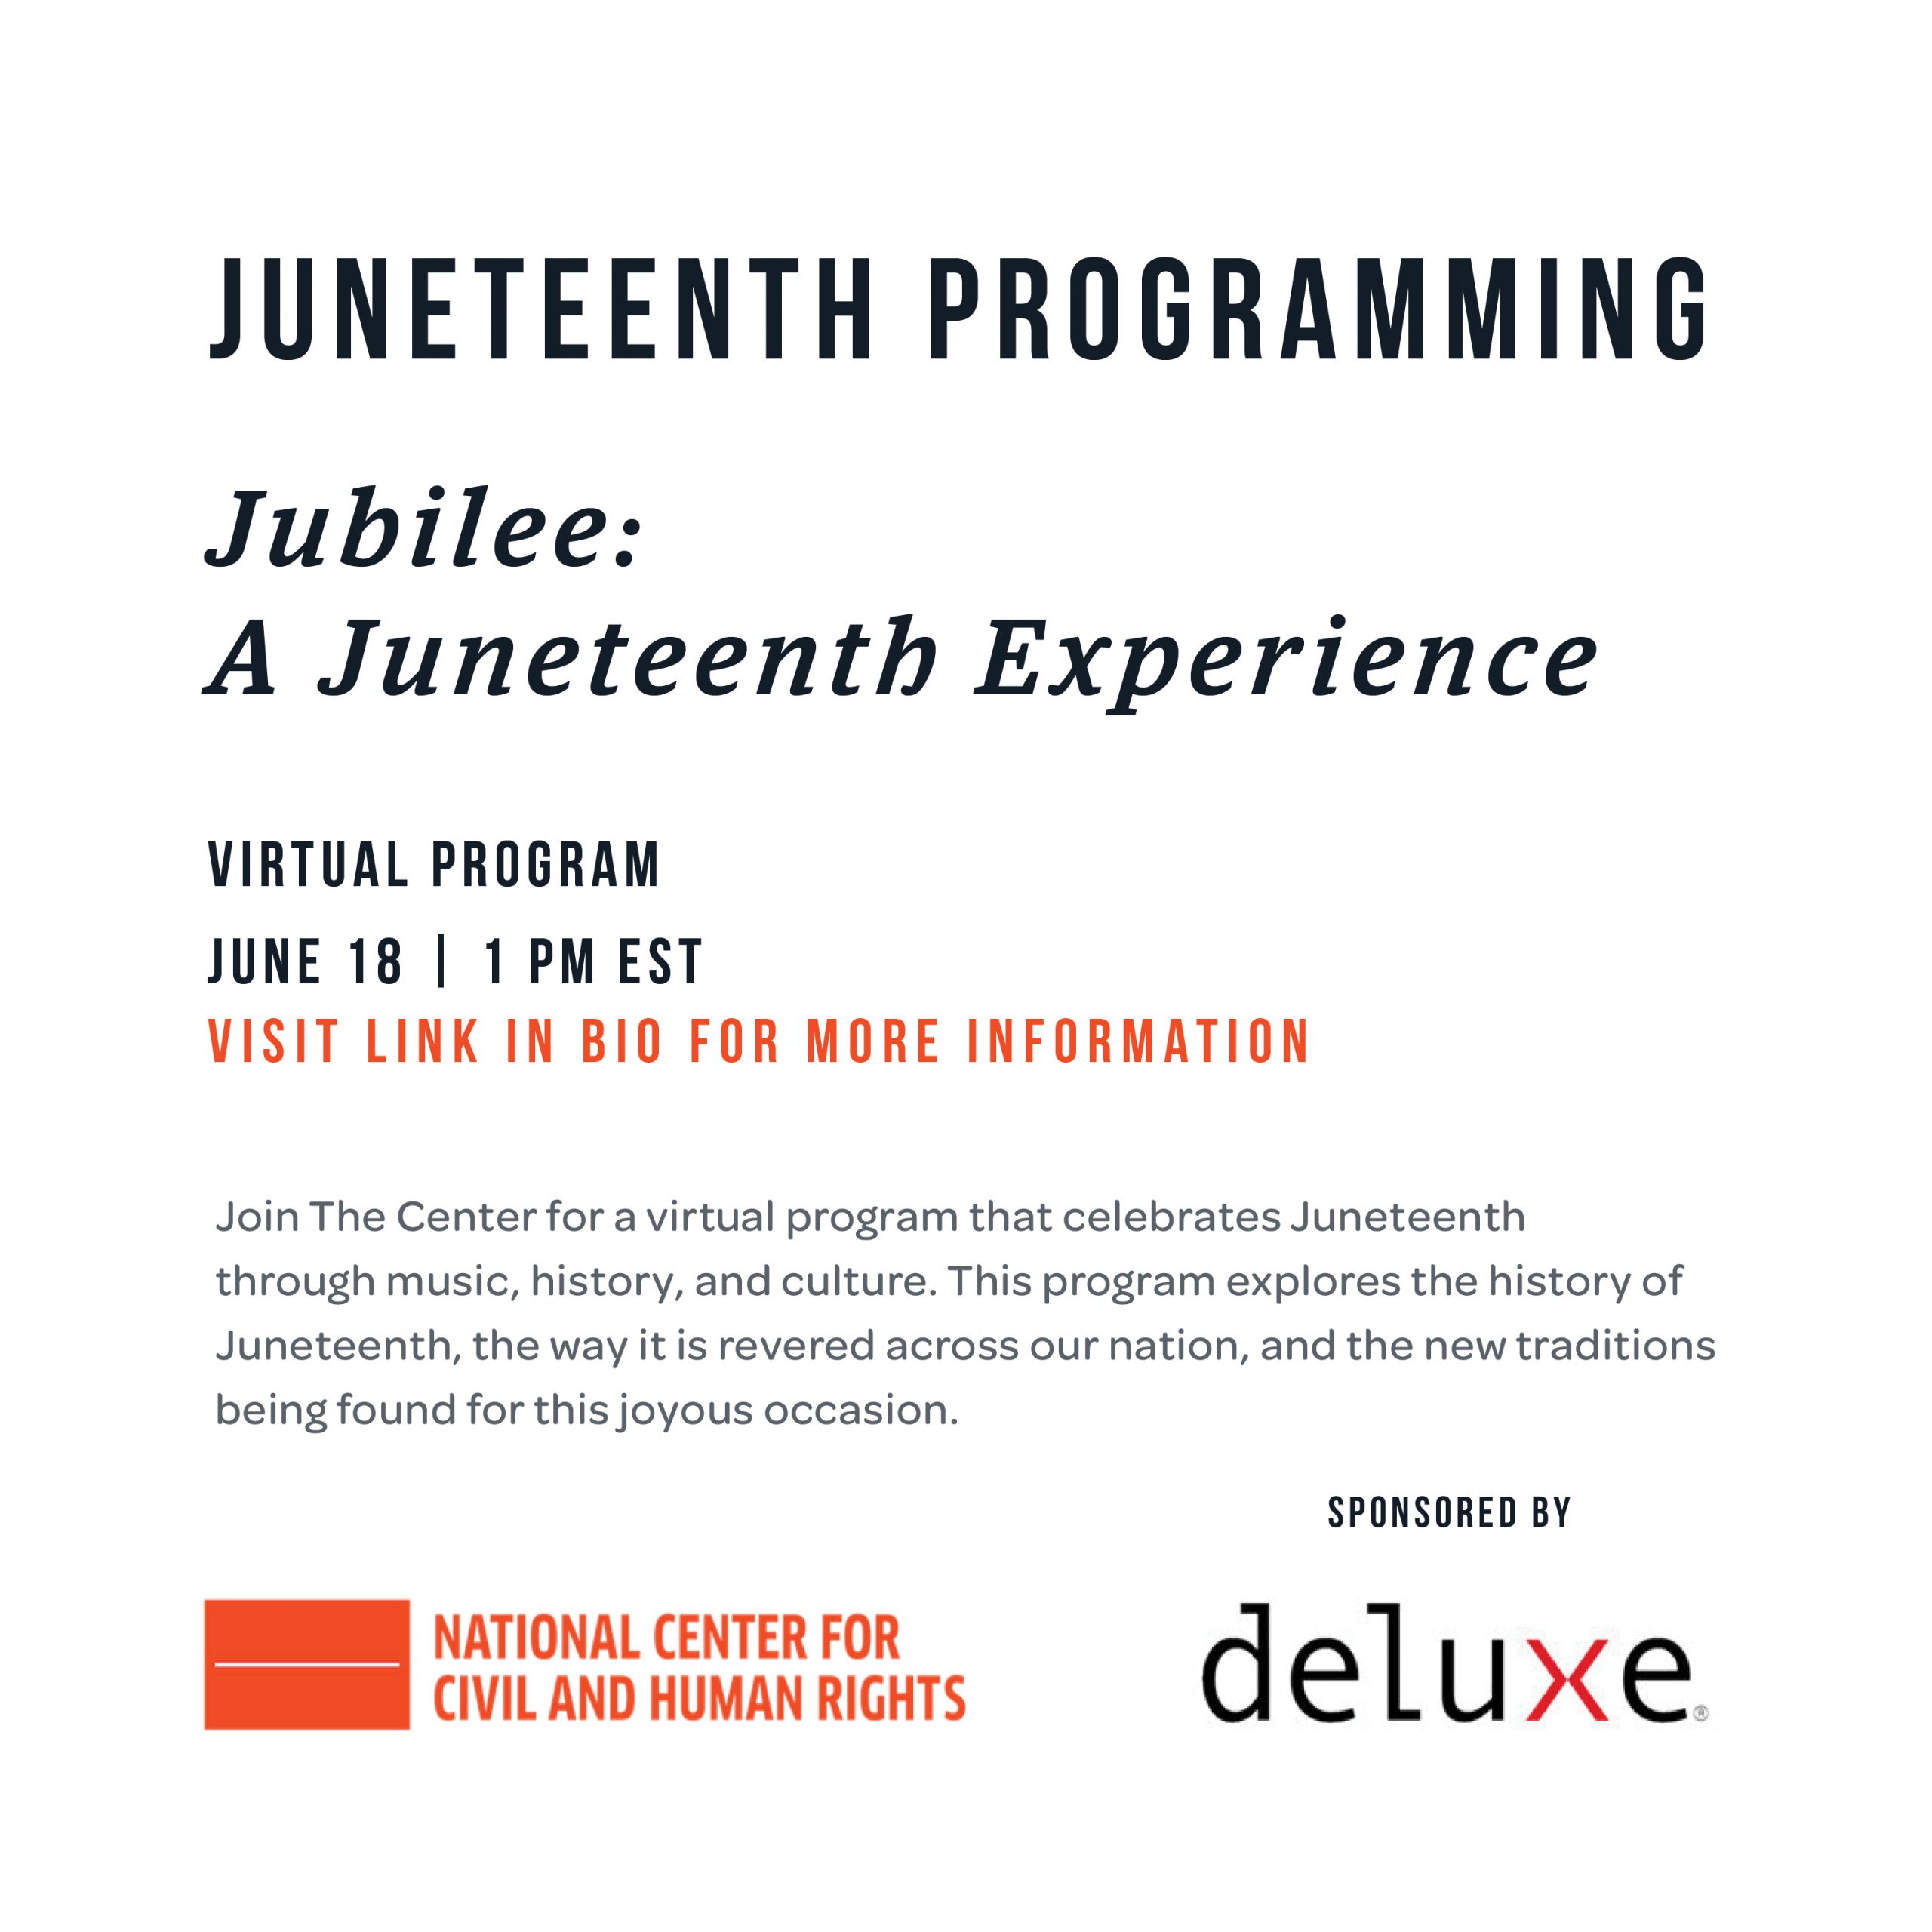 Jubilee: A Juneteenth Experience